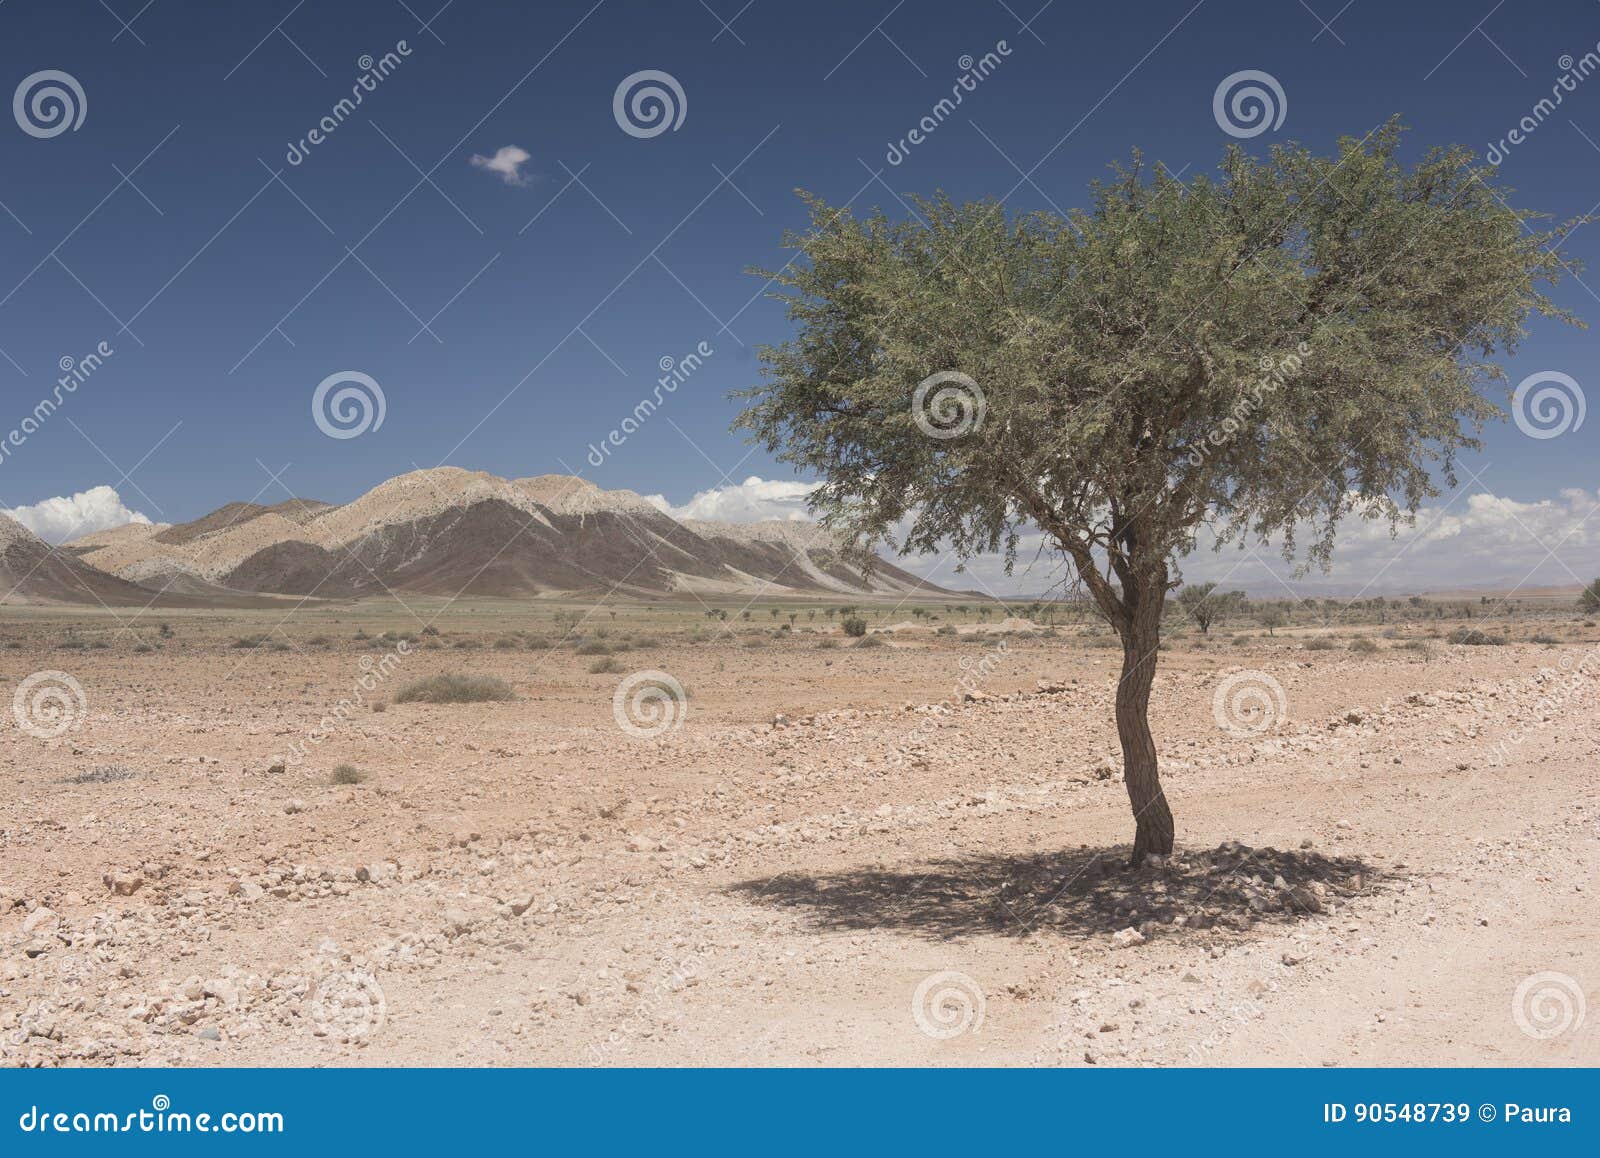 namib desert - lonely tree, africa